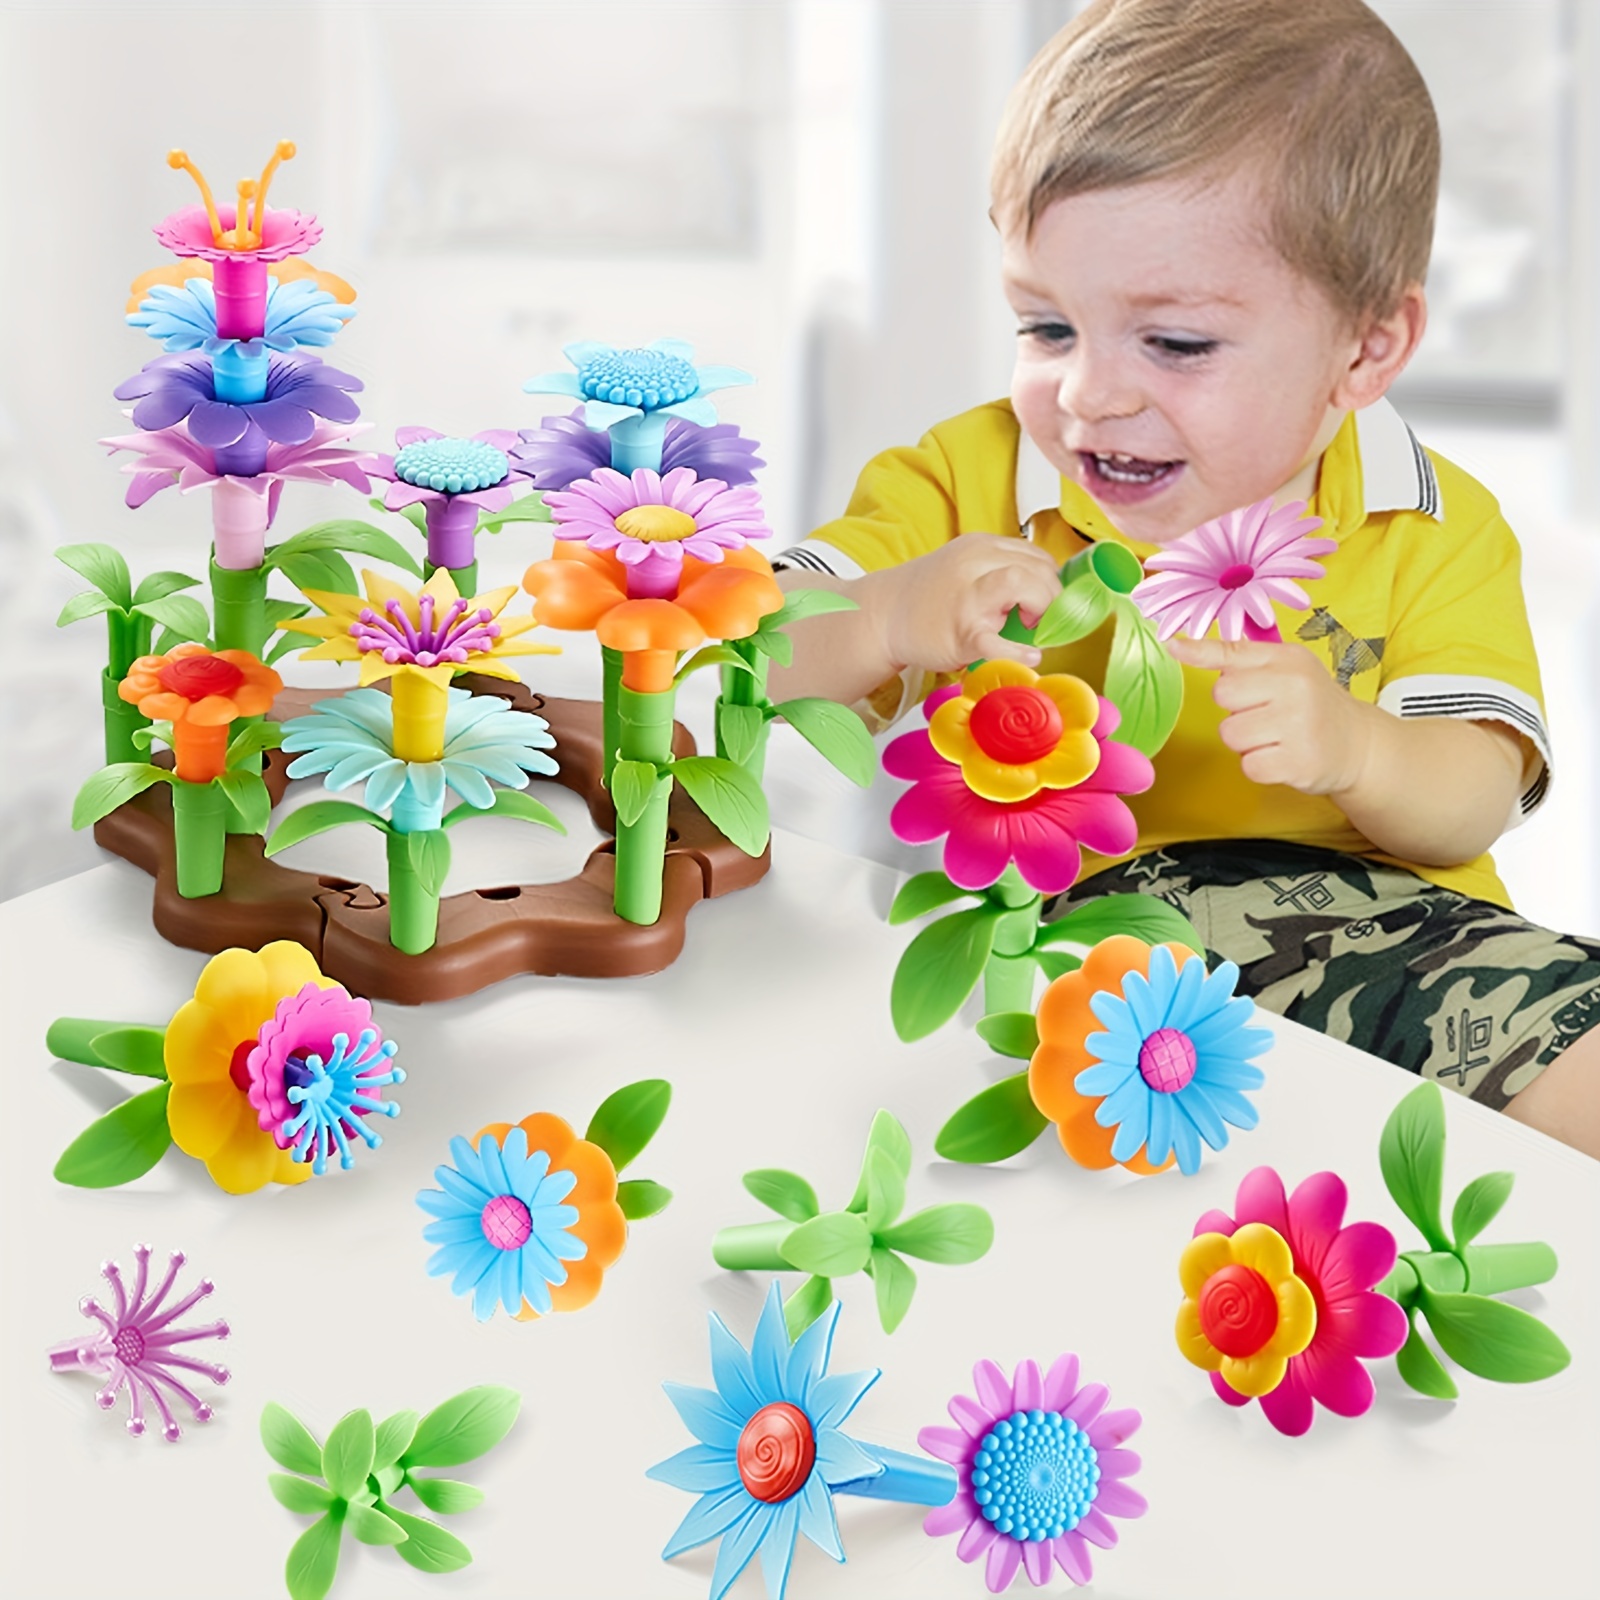 Building Blocks For Kids, Blocks Flowers, Blocks Games